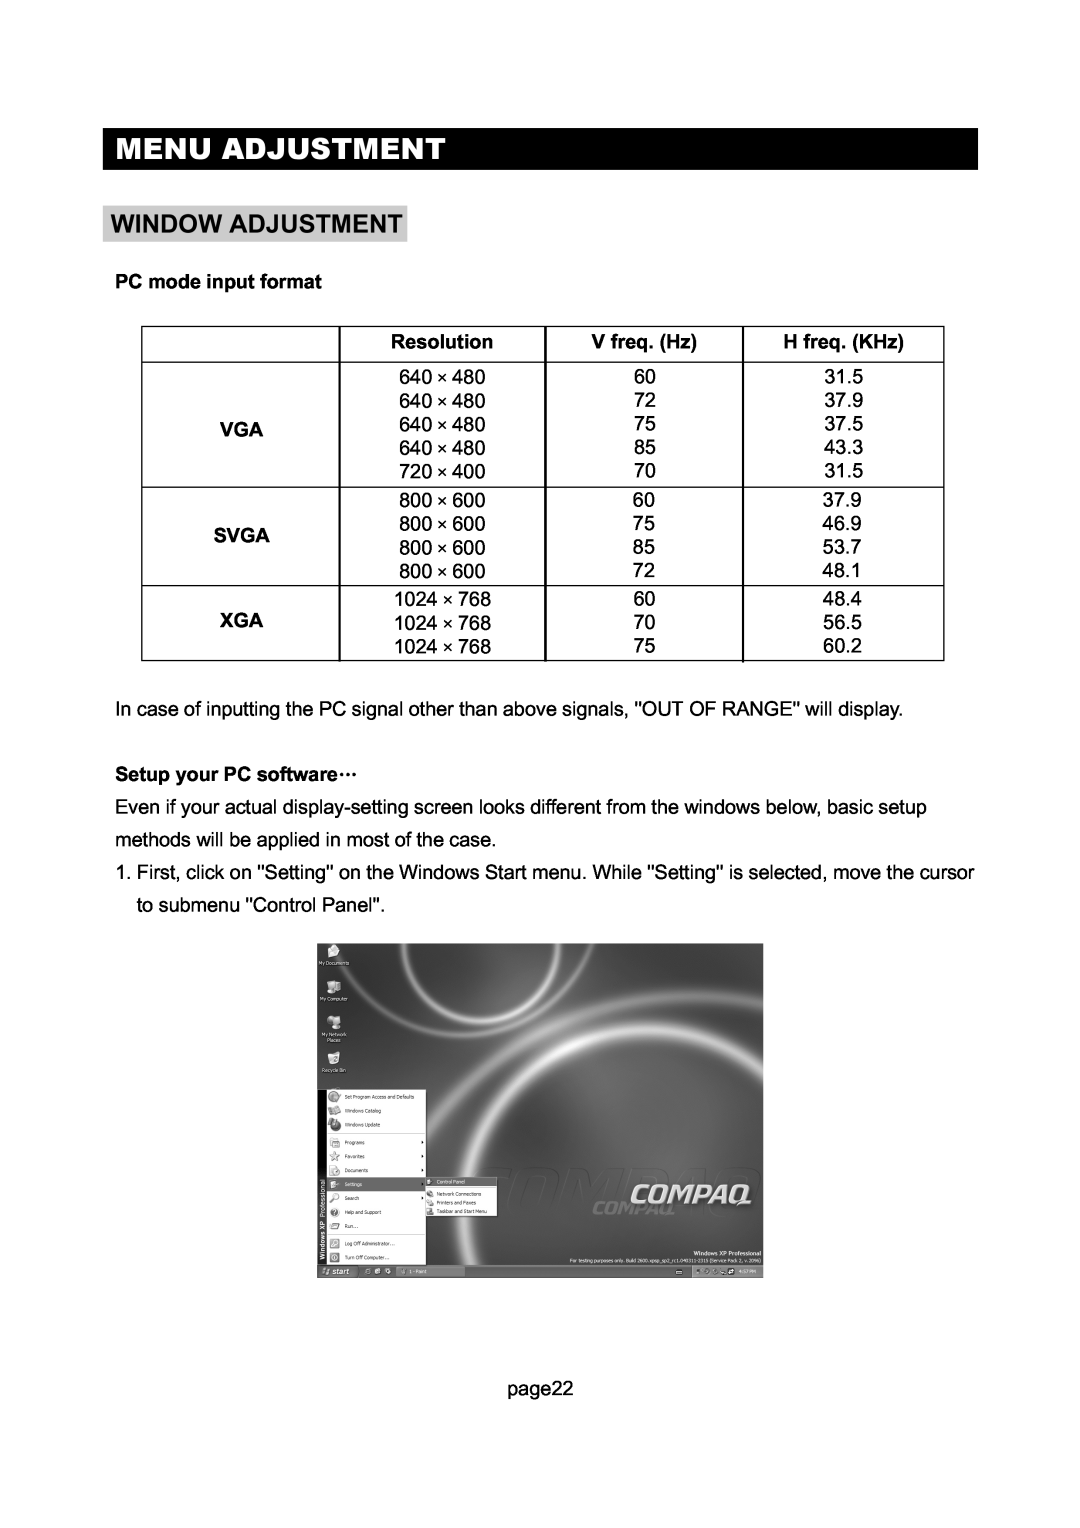 Initial DTV-172A manual Window Adjustment, Menu Adjustment, PC mode input format, Resolution, V freq. Hz, H freq. KHz, Svga 